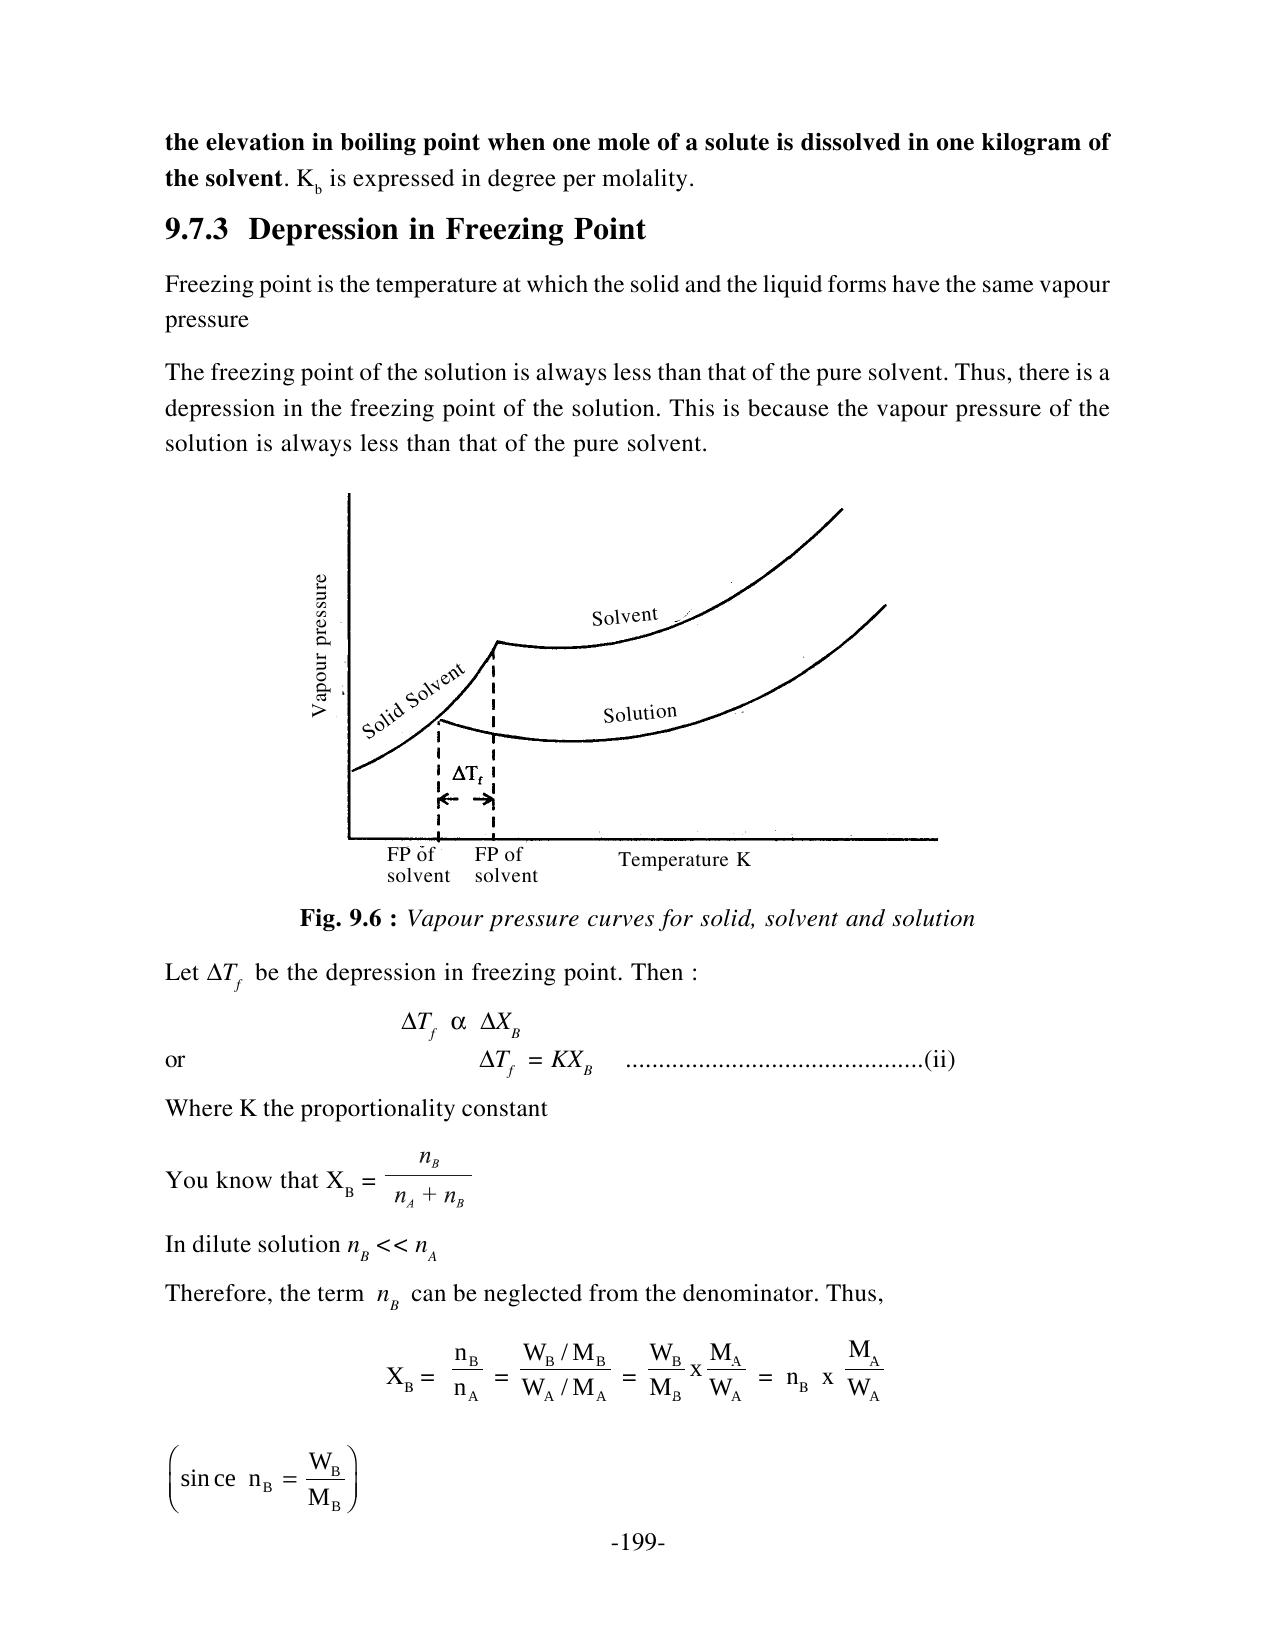 TS SCERT Inter 1st Year Chemistry Vol – I Path 1 (English Medium) Text Book - Page 208